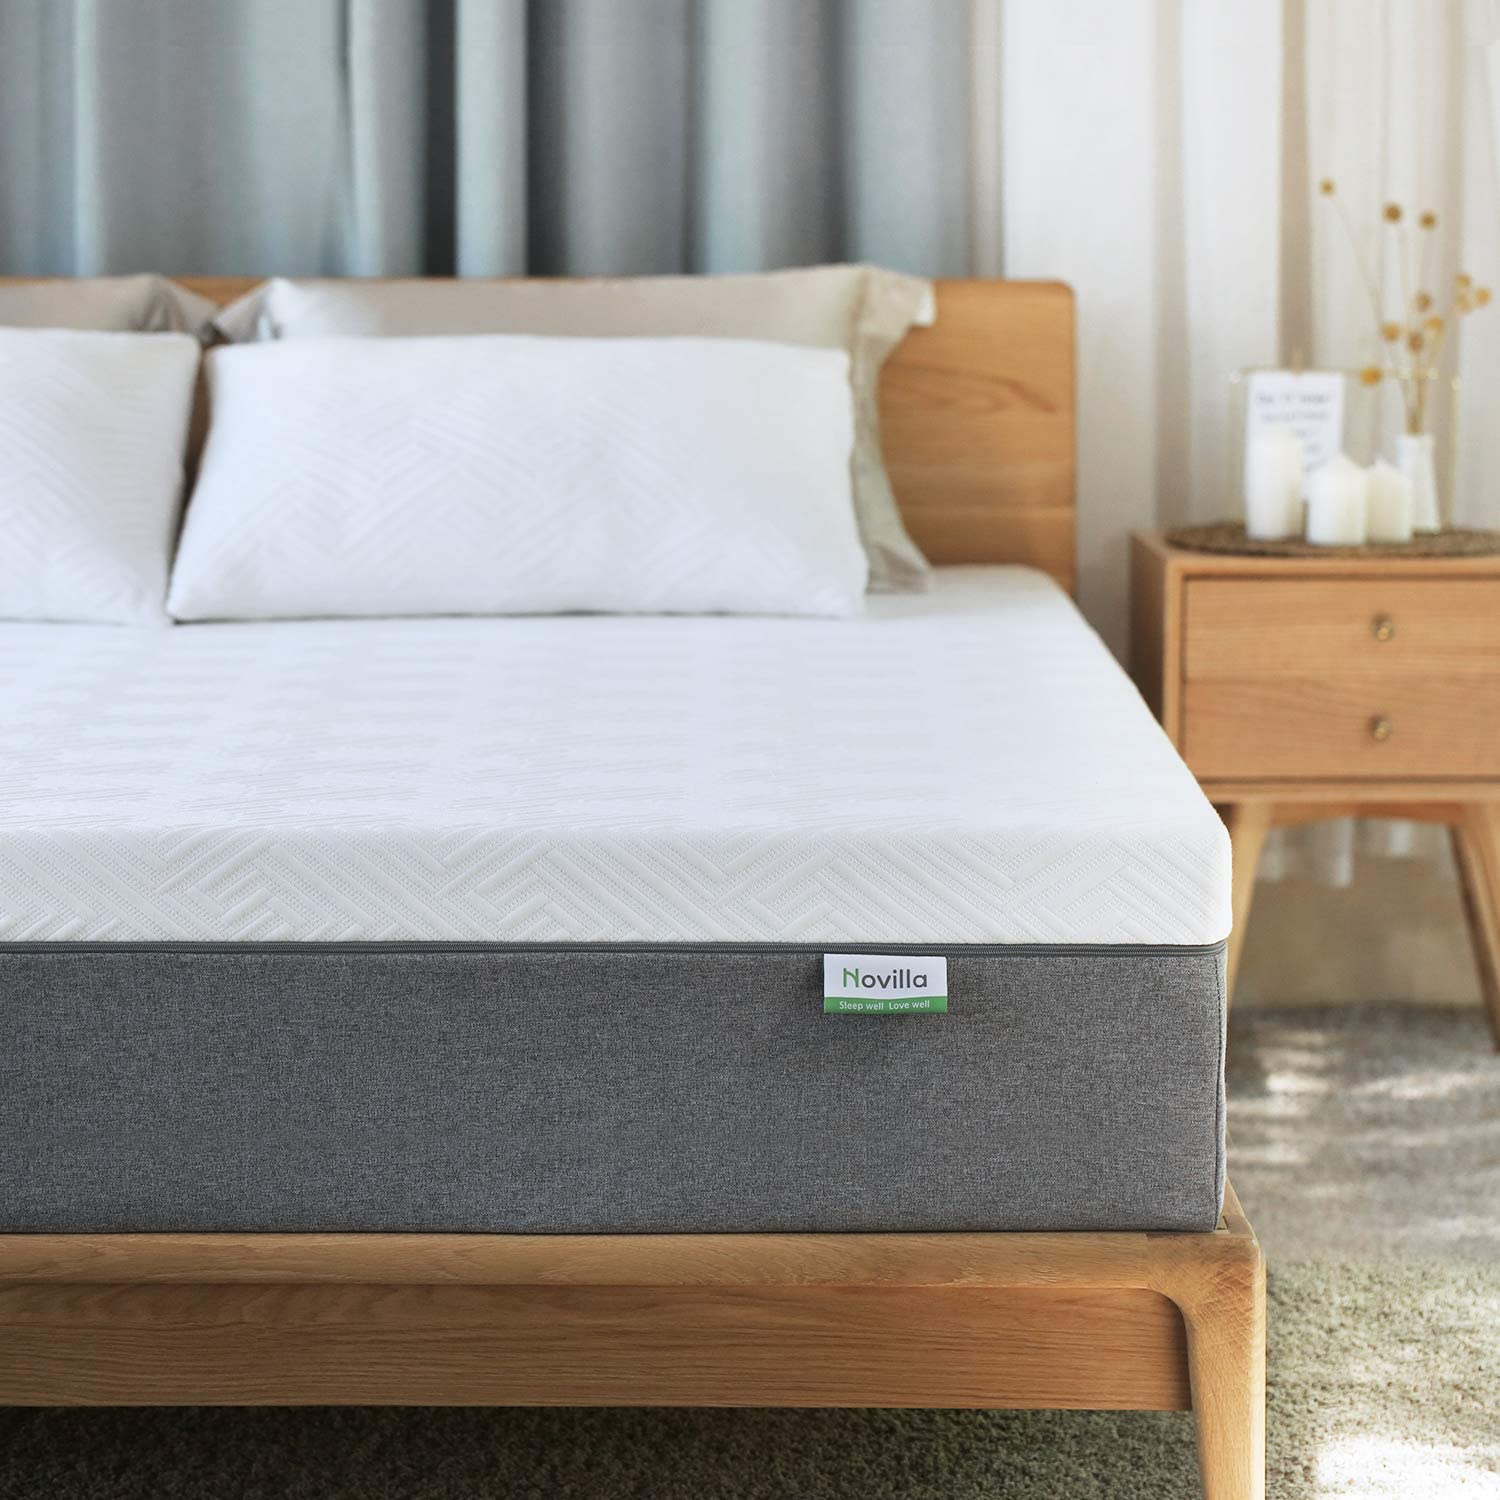 Sleep tight with king size memory foam mattress